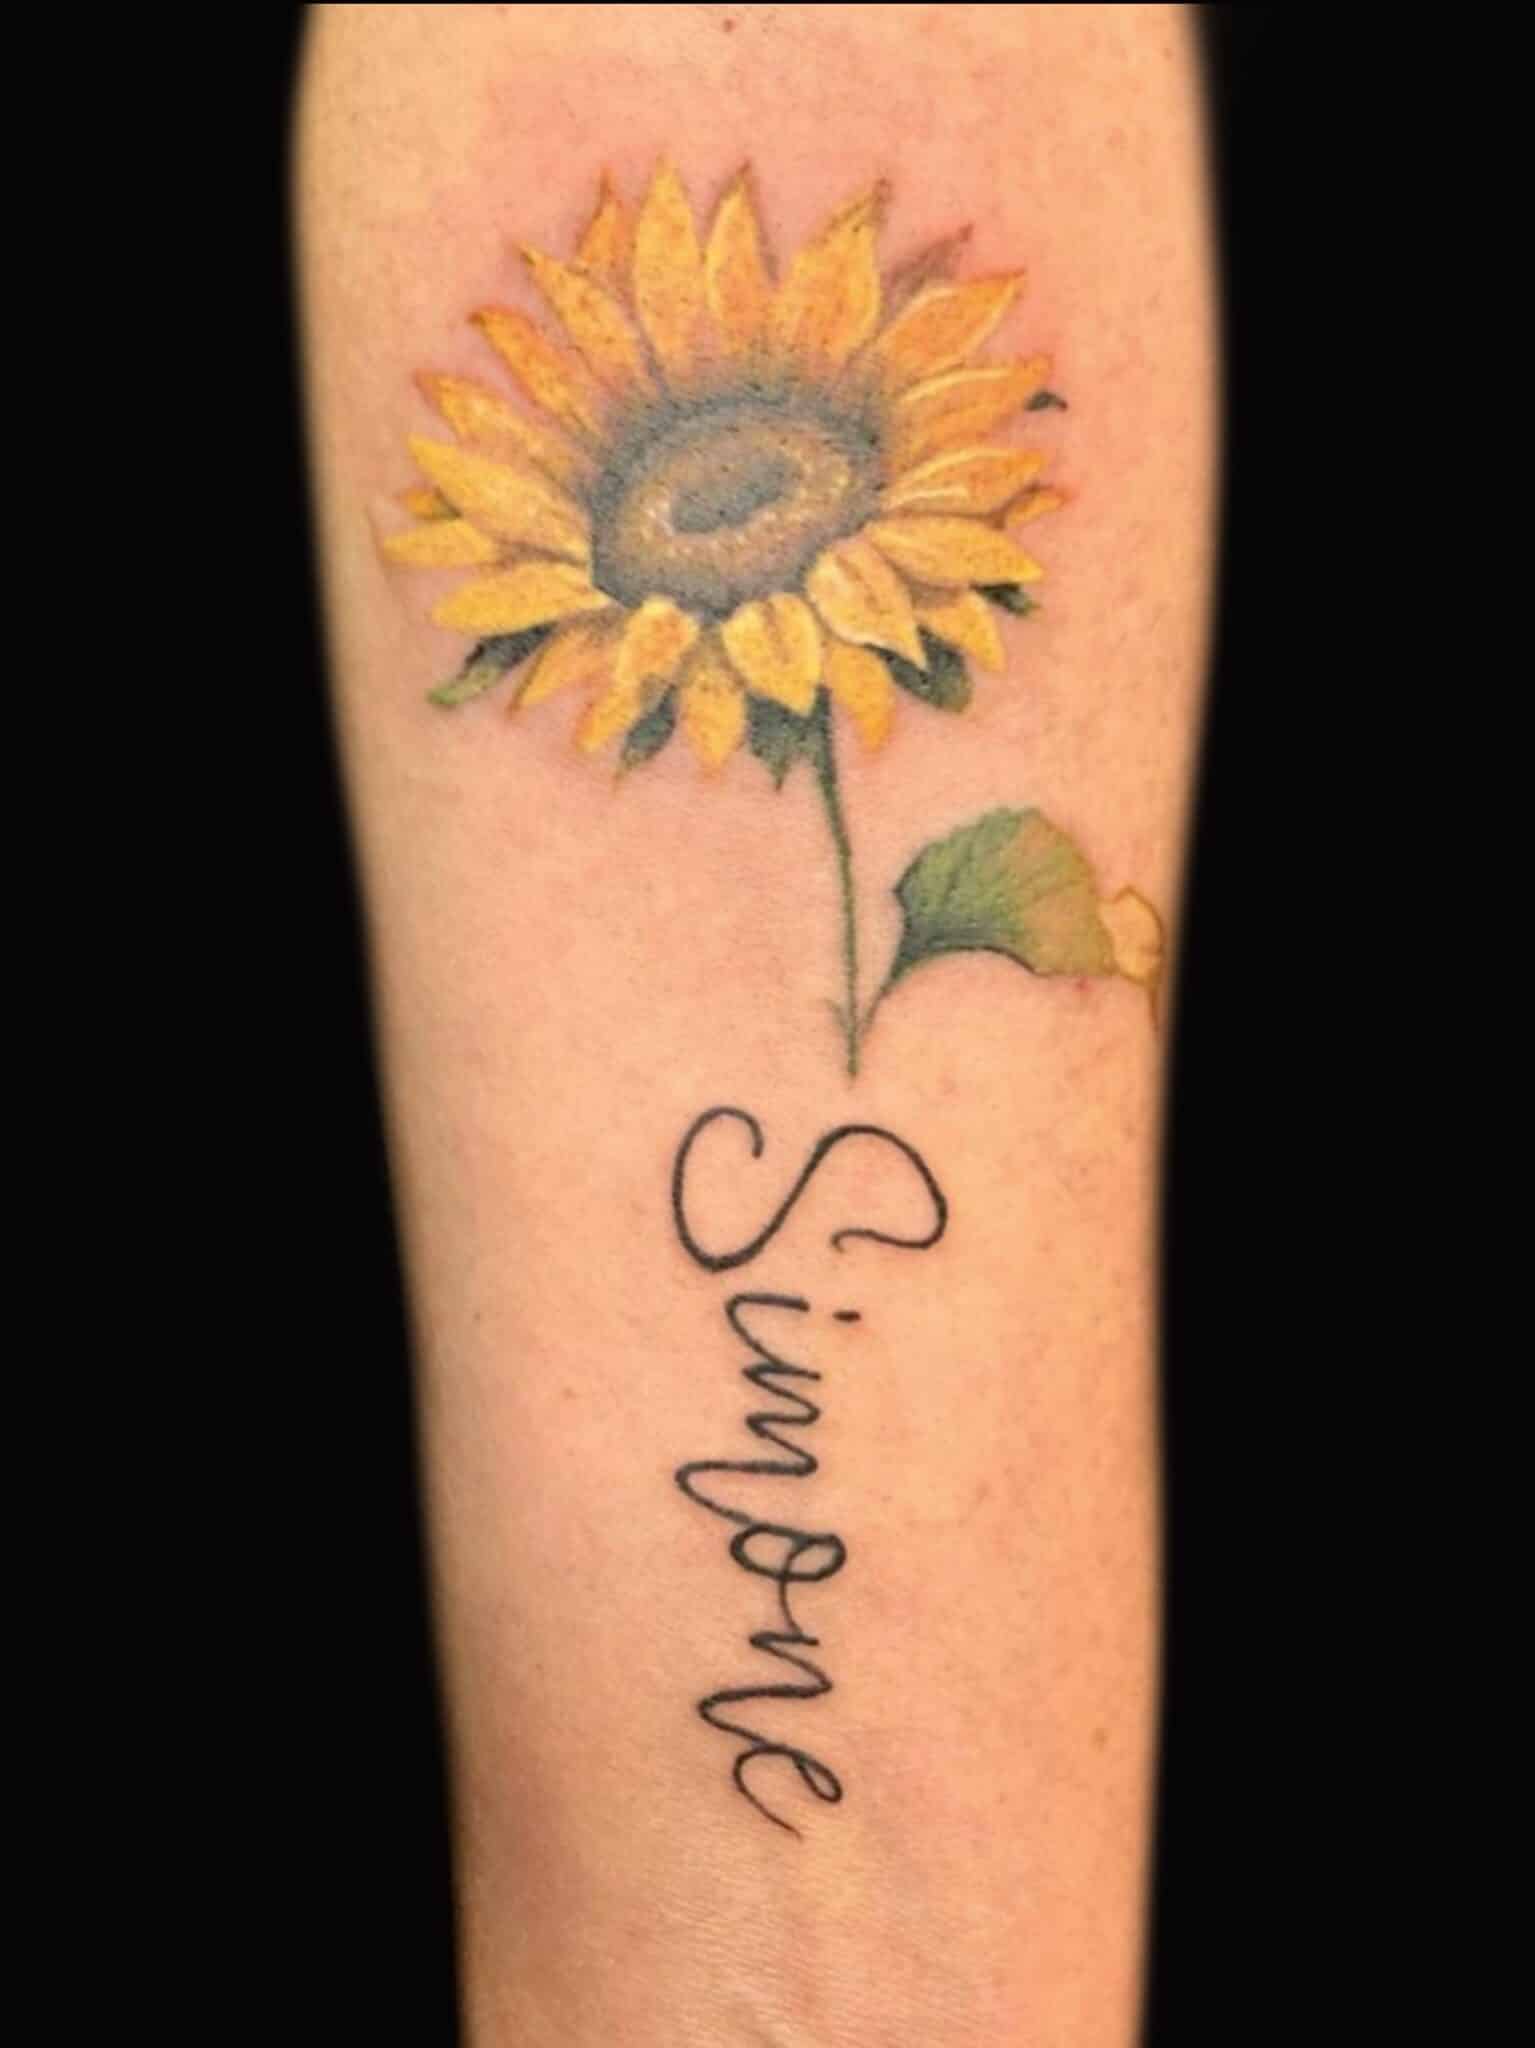 Sunflower tattoo design, Russell Loo, Artist at Revolt Tattoos